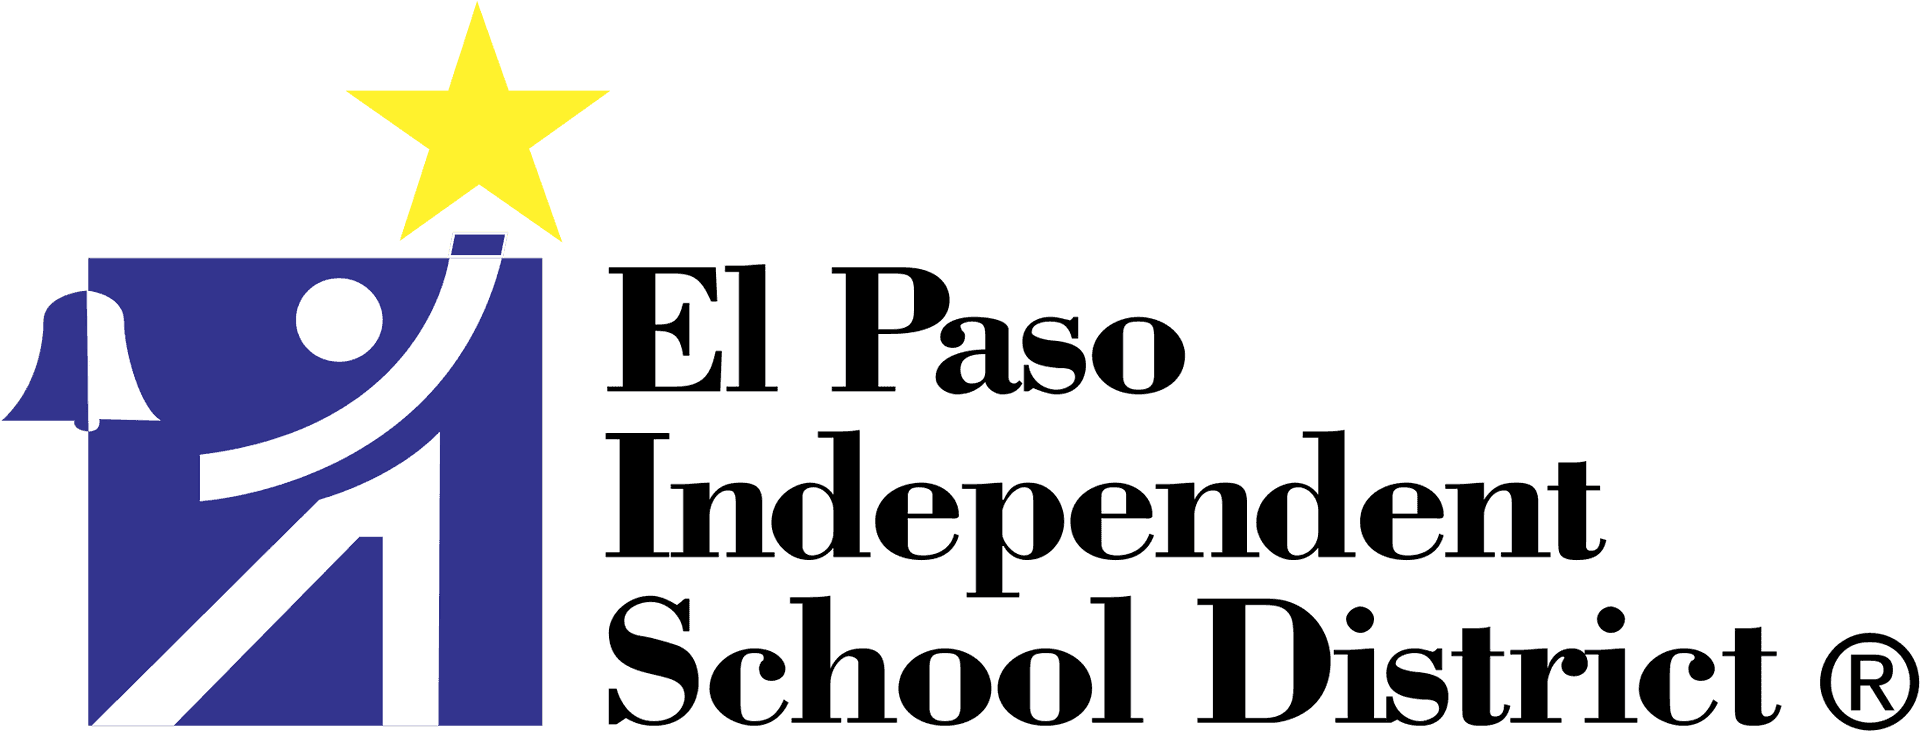 El Paso Independent School District Logo PNG